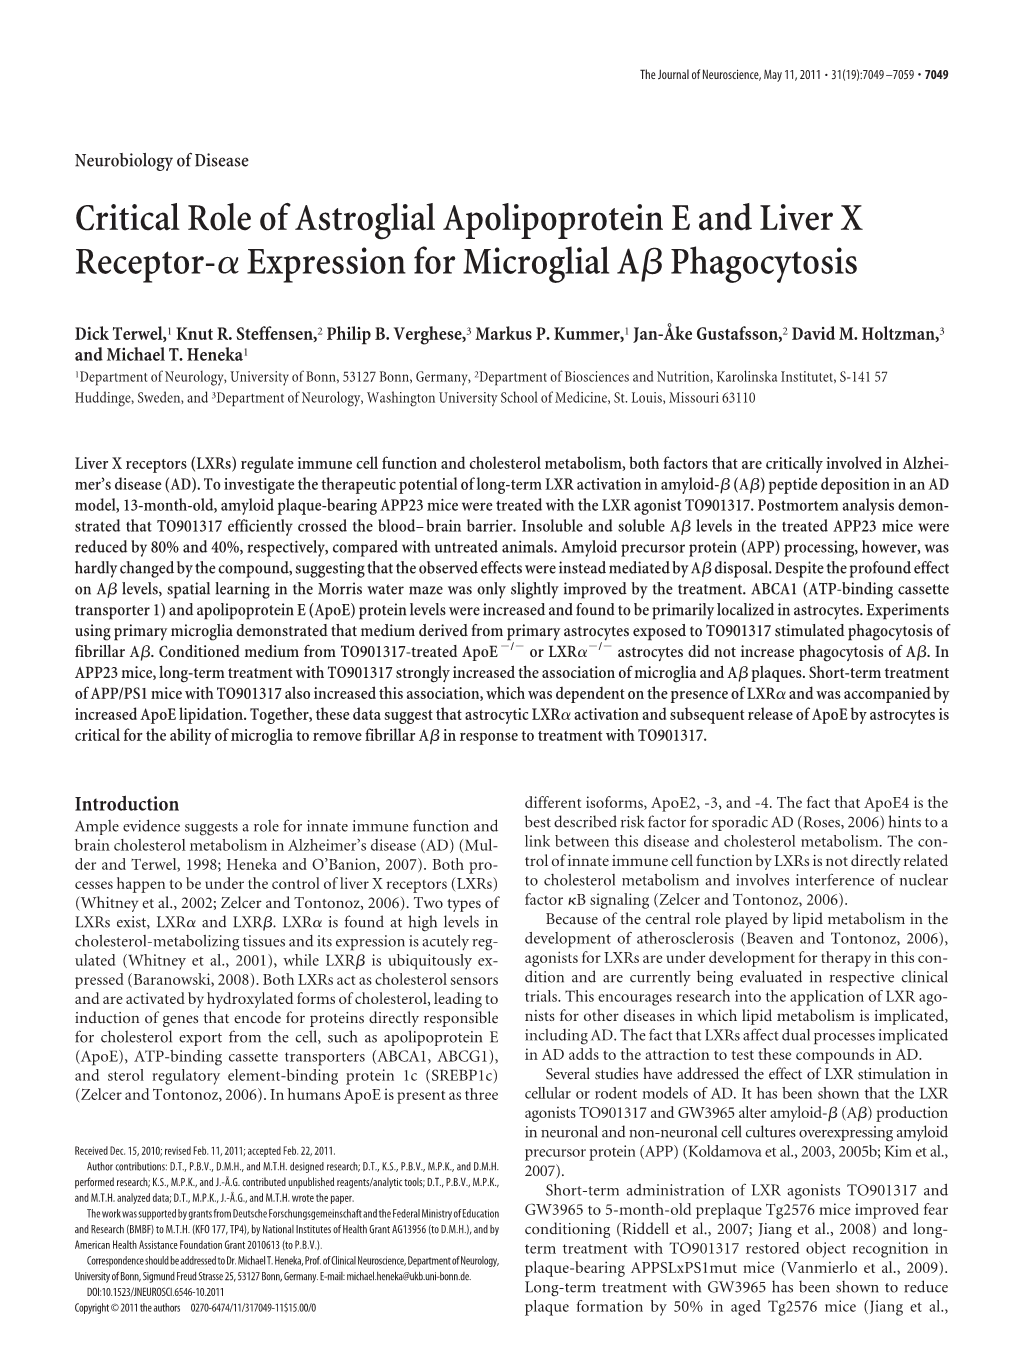 Critical Role of Astroglial Apolipoprotein E and Liver X Receptor-␣ Expression for Microglial A␤ Phagocytosis